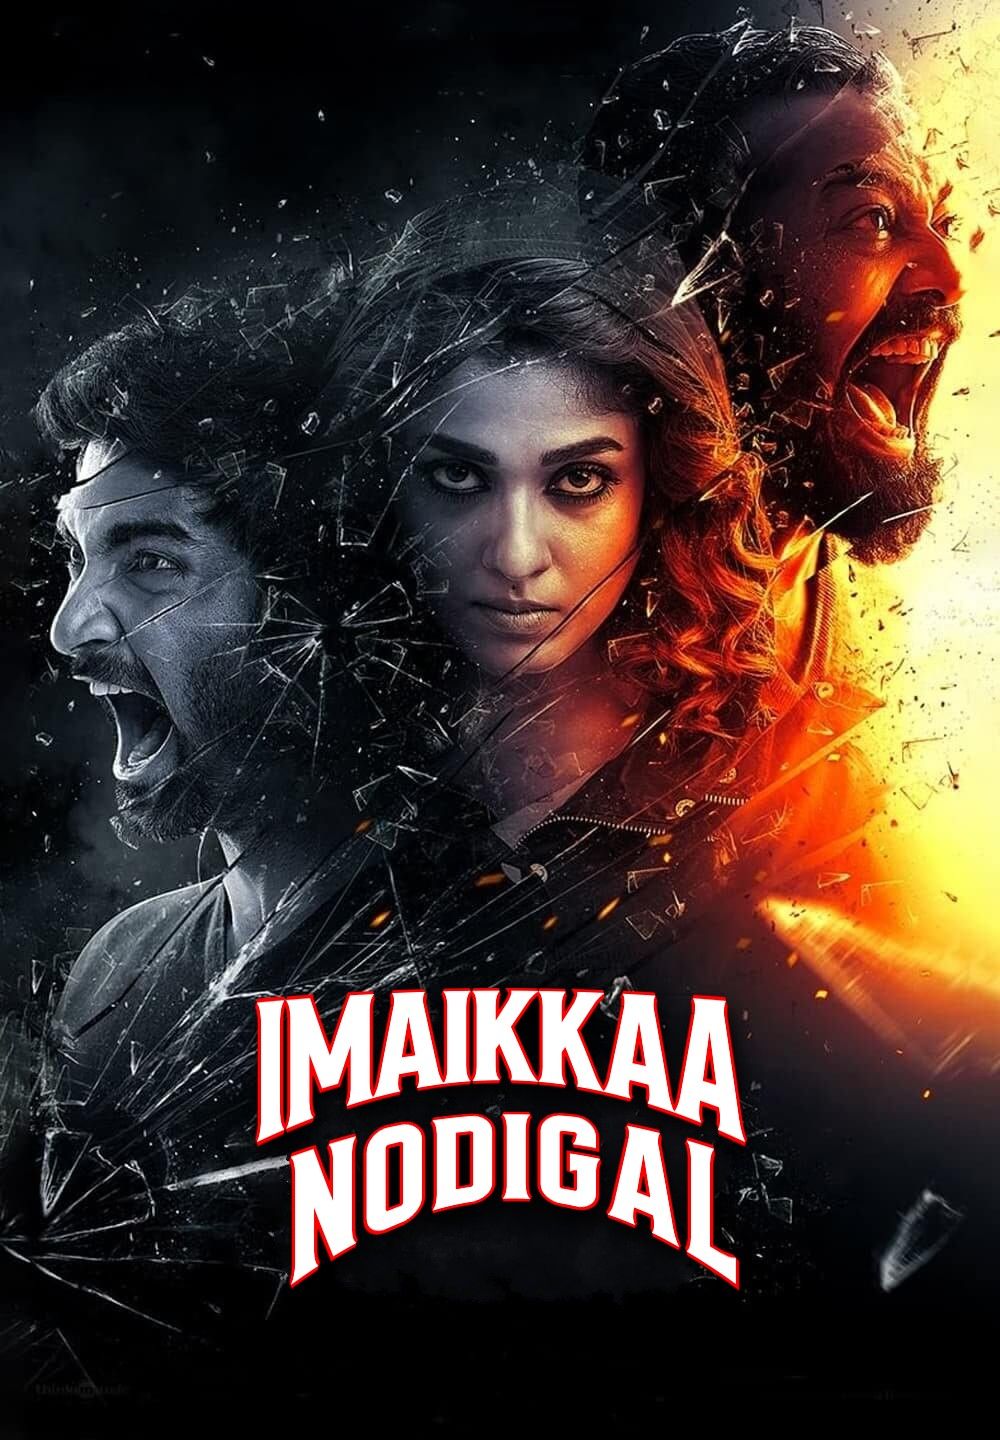 Imaikkaa Nodigal (2018) Hindi HQ Dubbed Movie download full movie